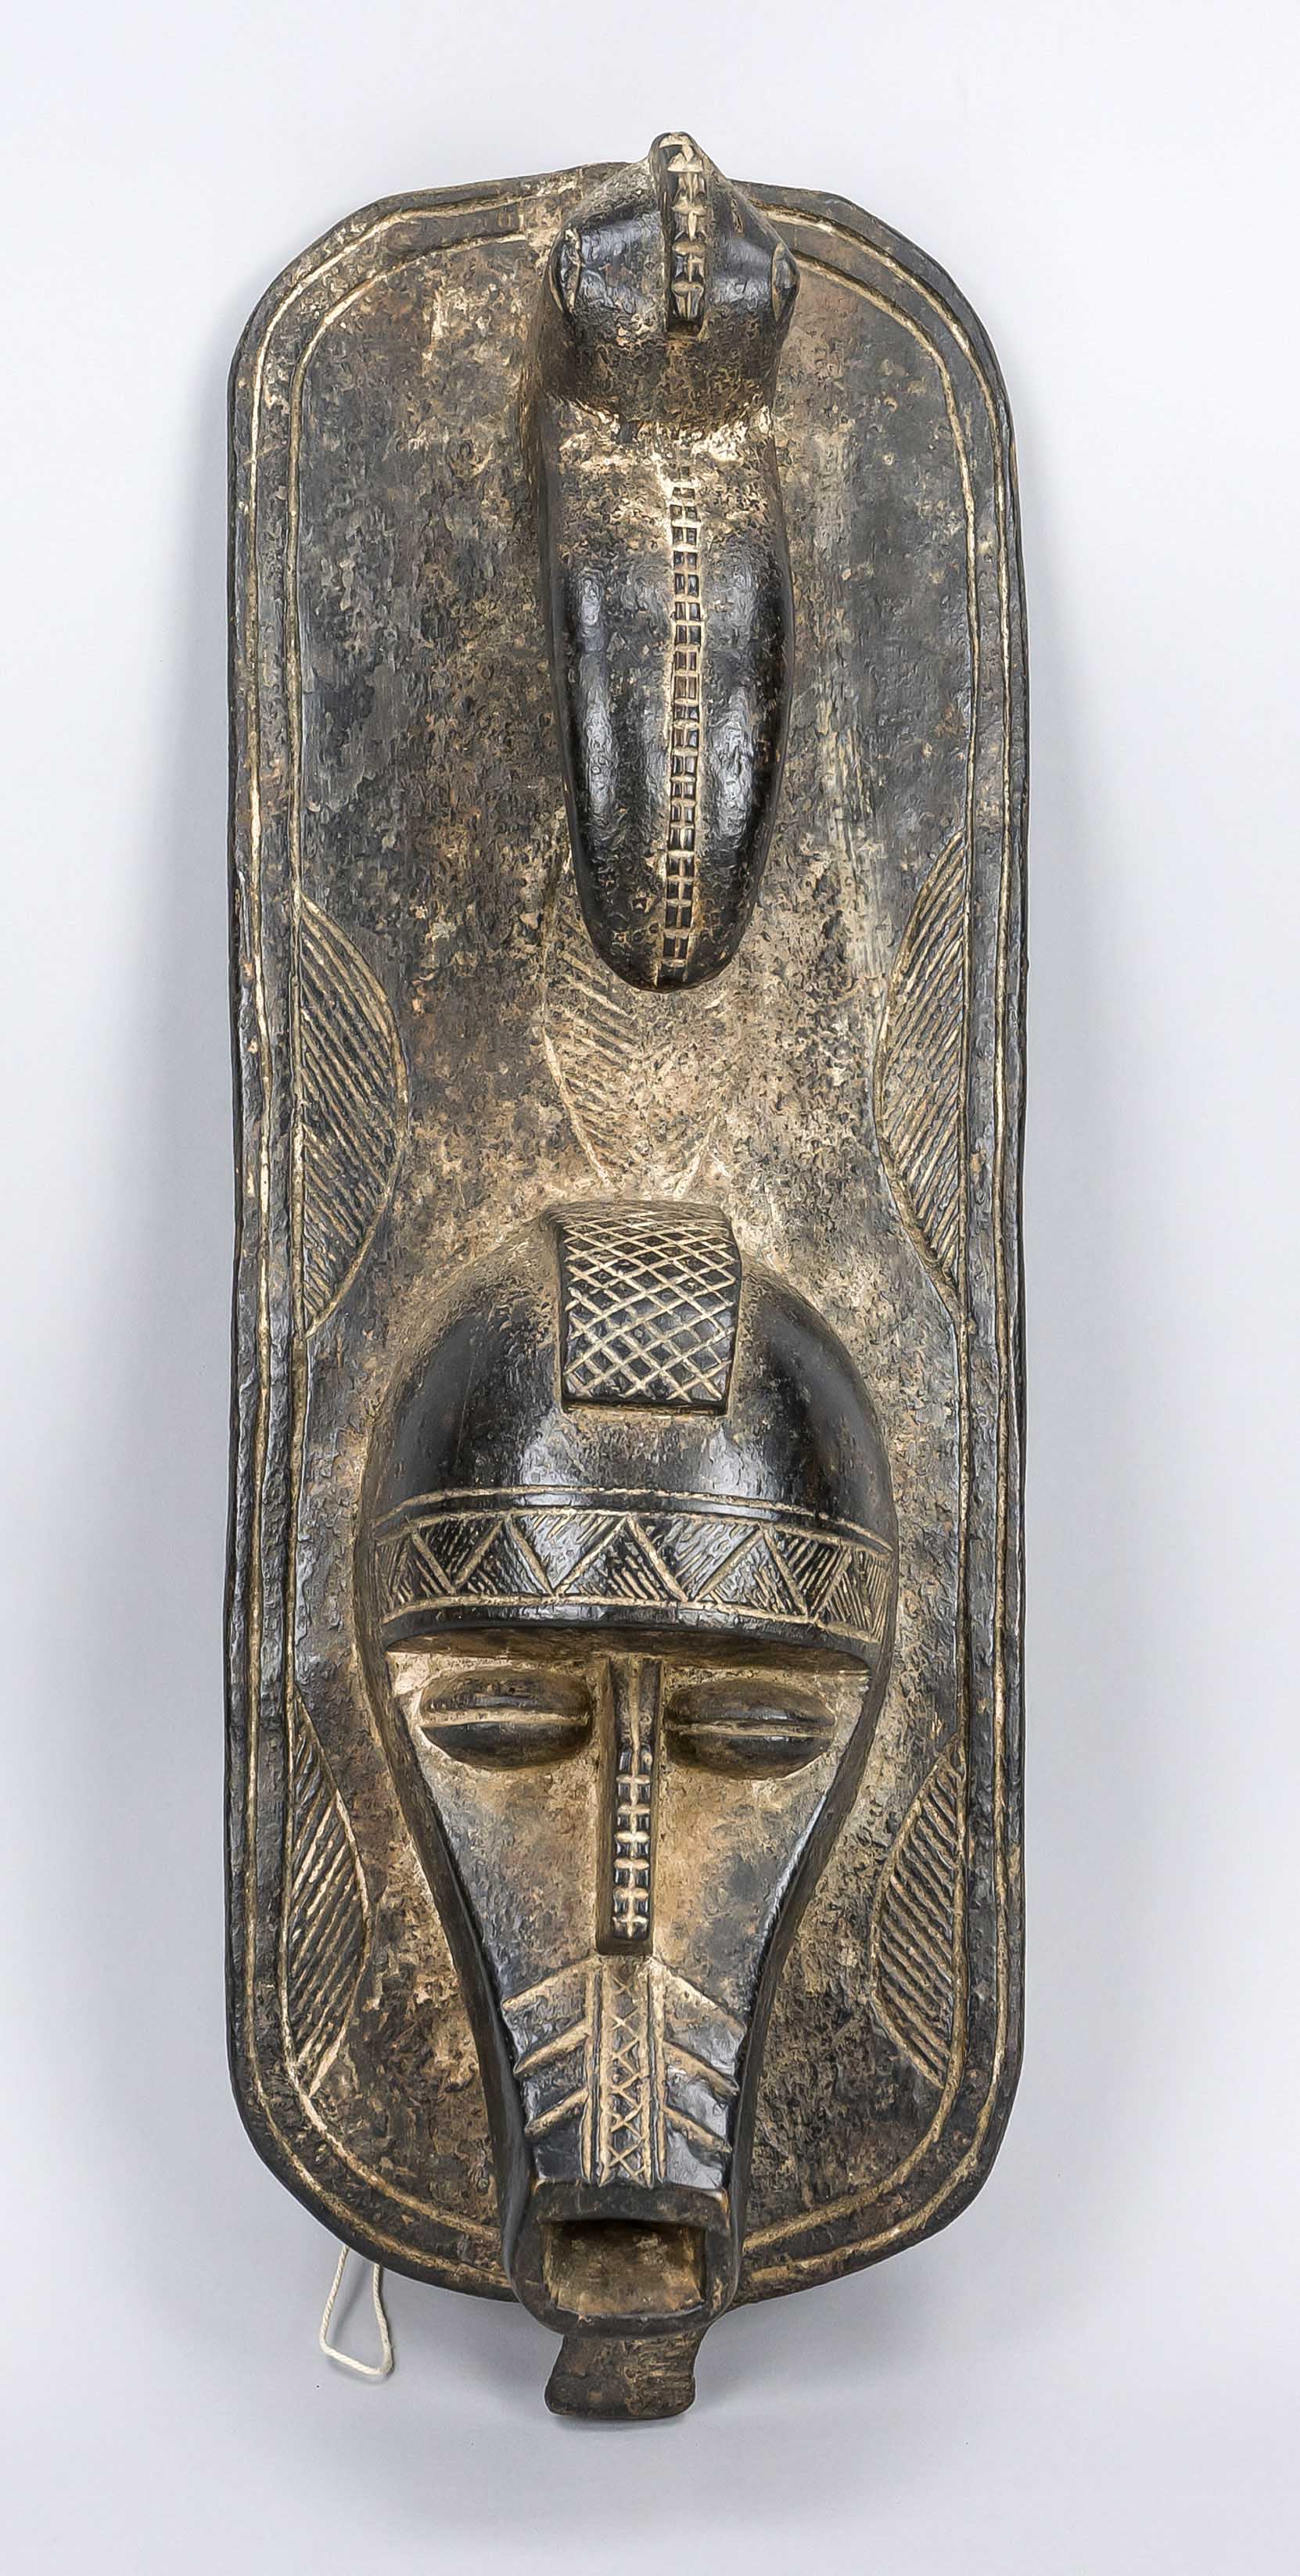 Mask of the Senufo, Ivory Coast, 20th century, dark, light wood, slightly rubbed, 52 x 20 cm